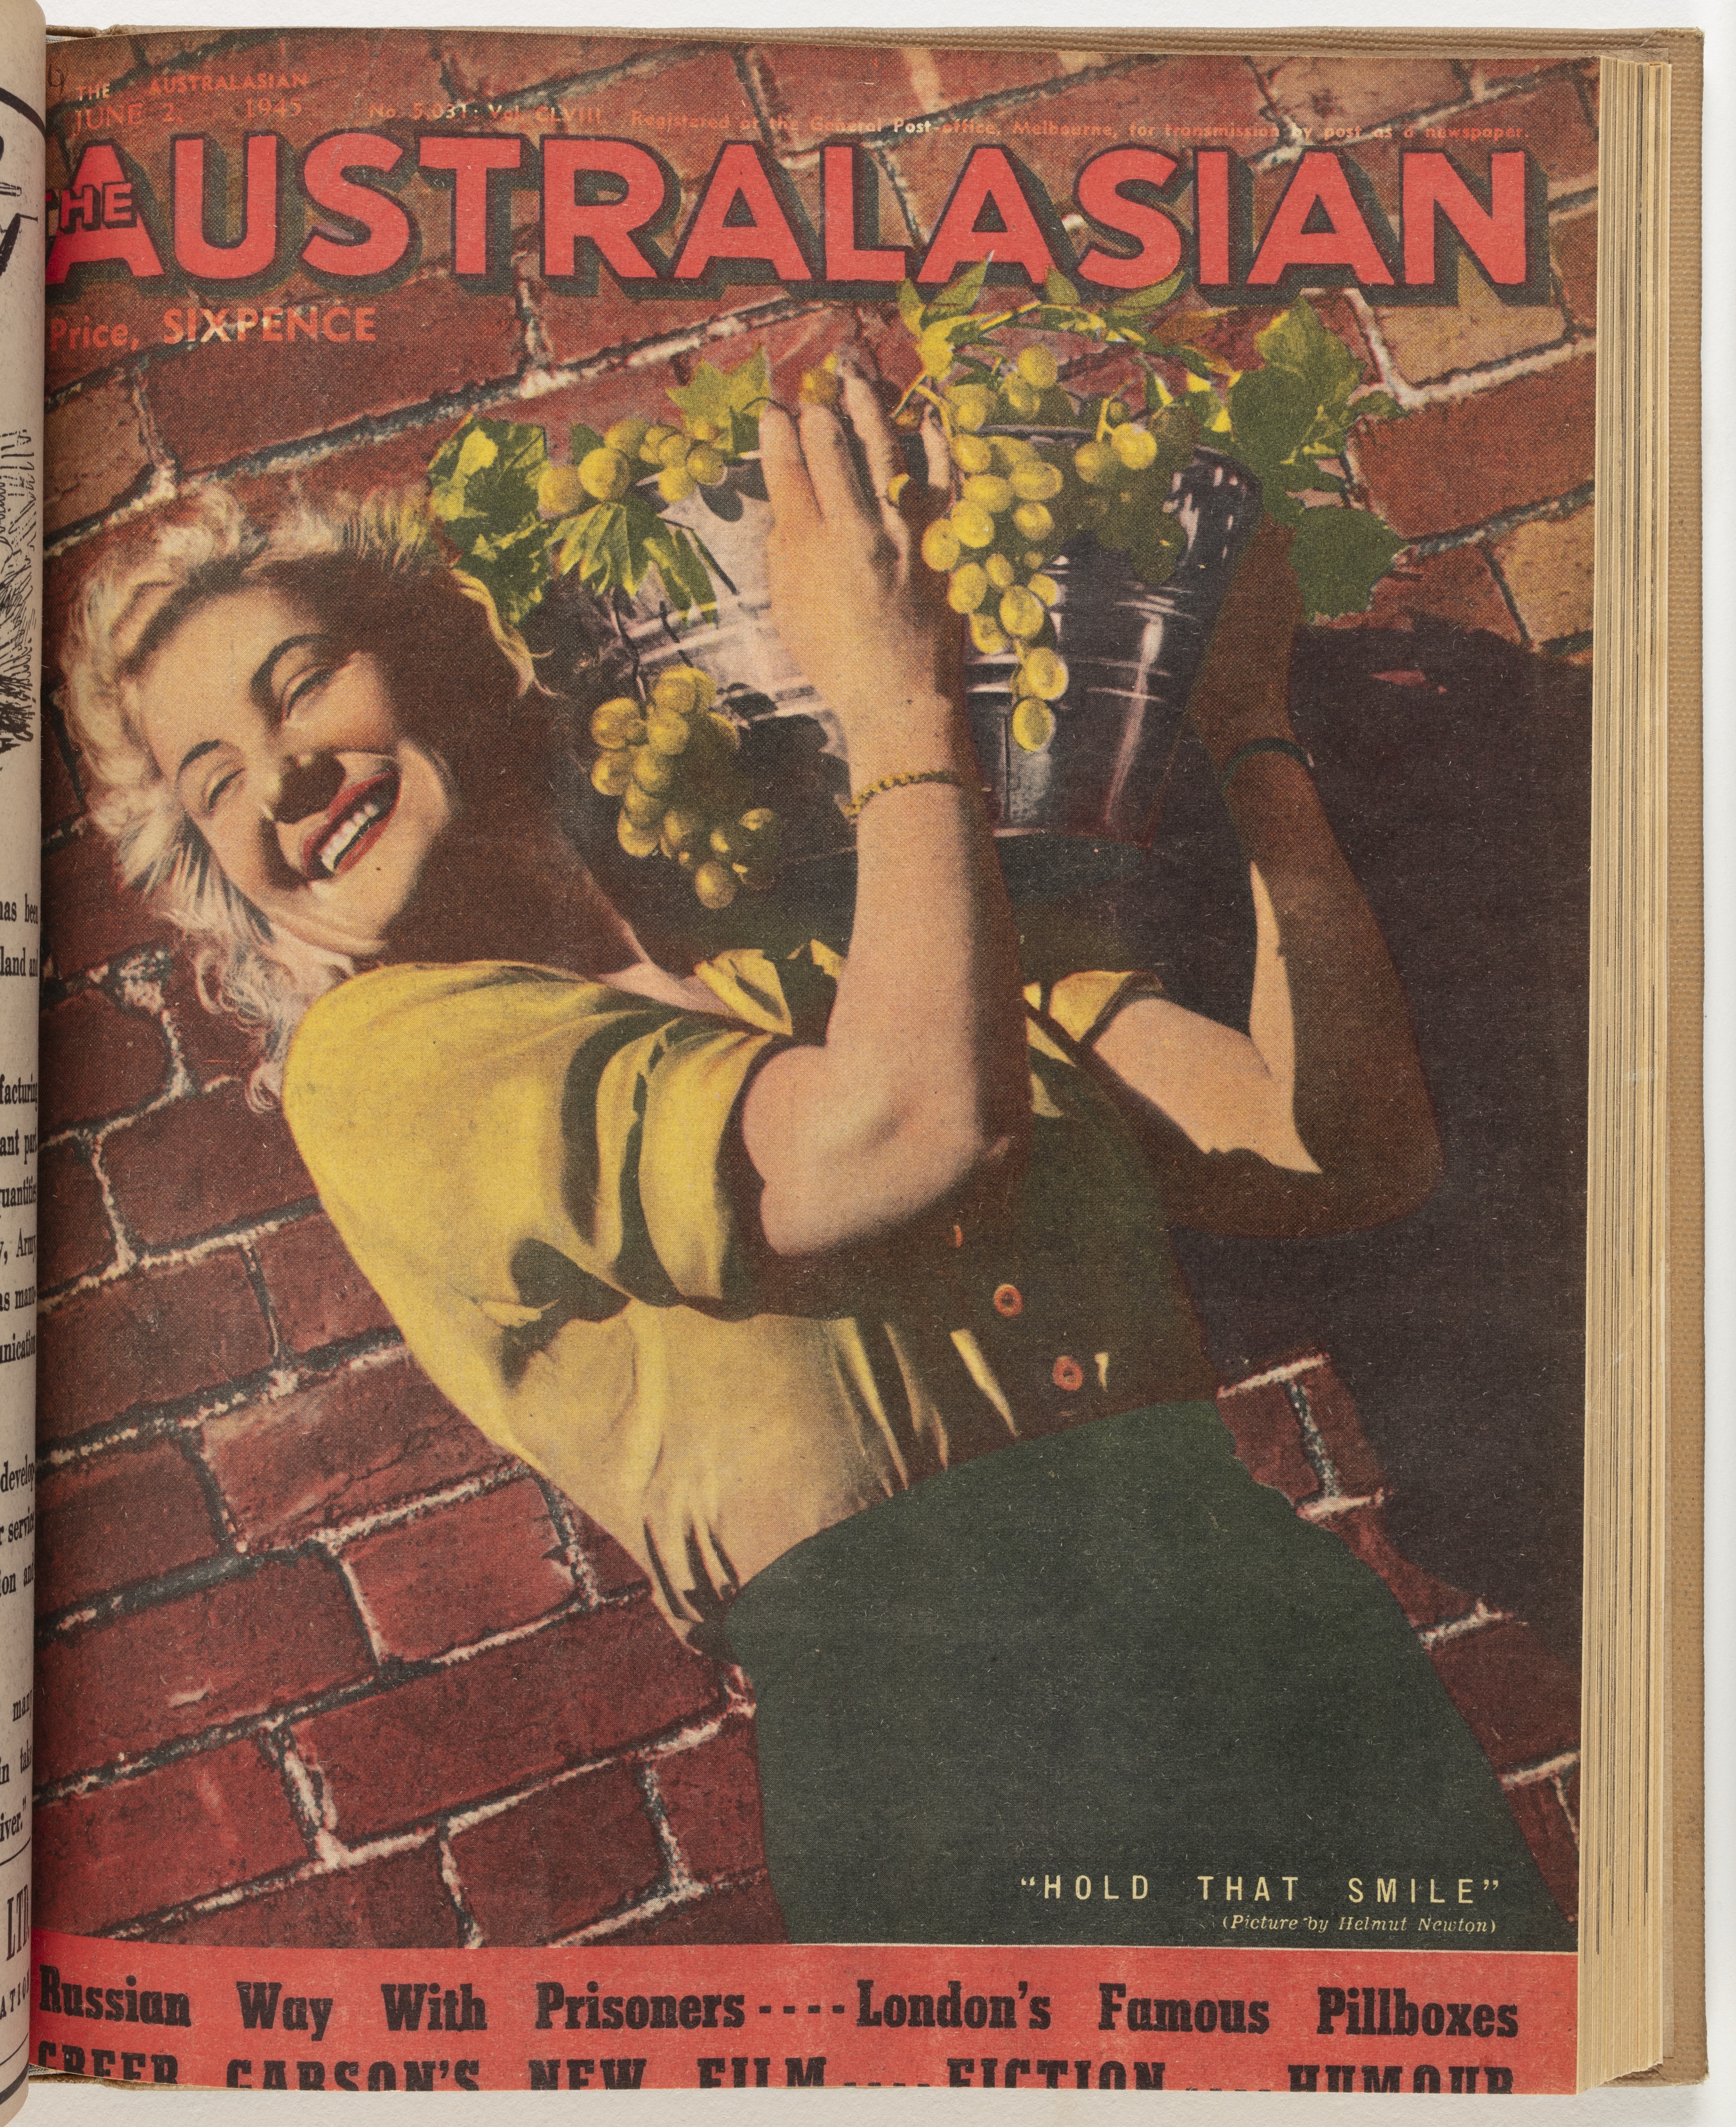 The Australasian, 2 June 1945, Helmut Newton’s first magazine cover